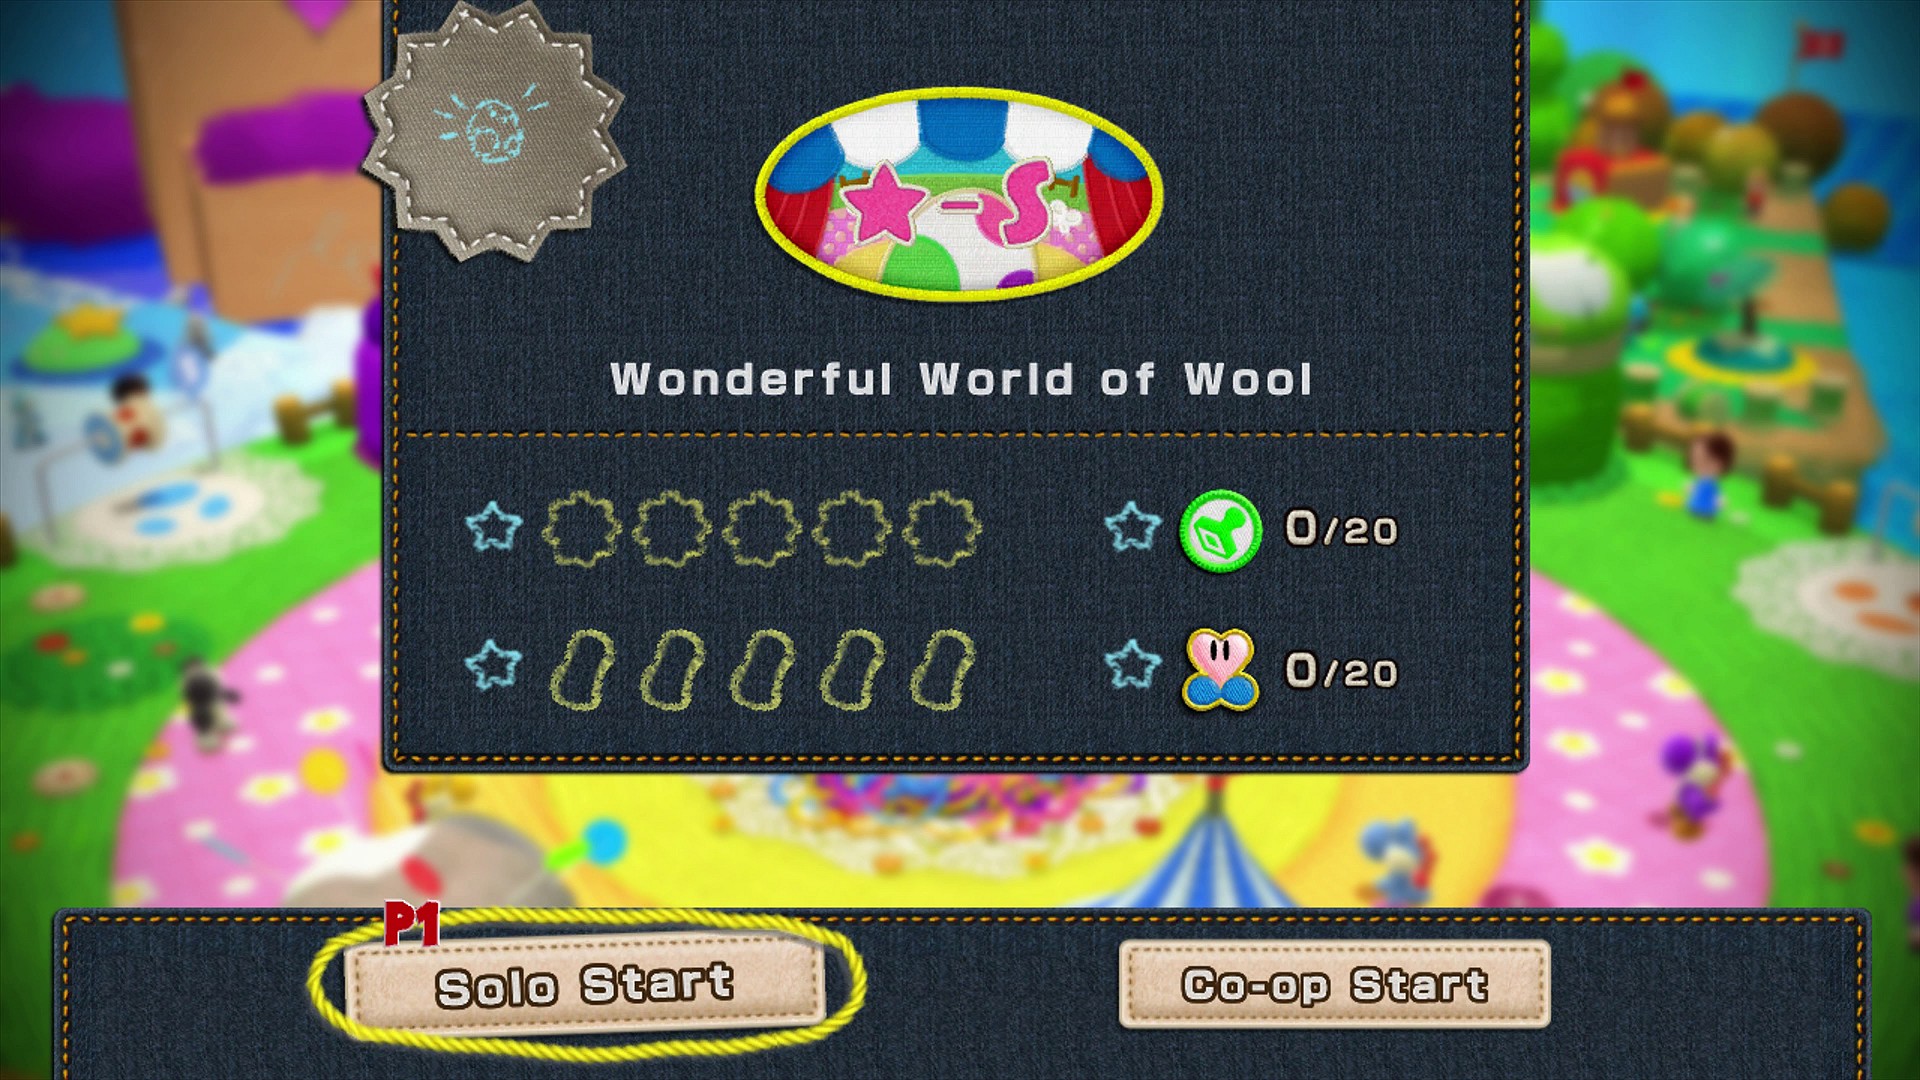 Yoshis woolly world 6-5